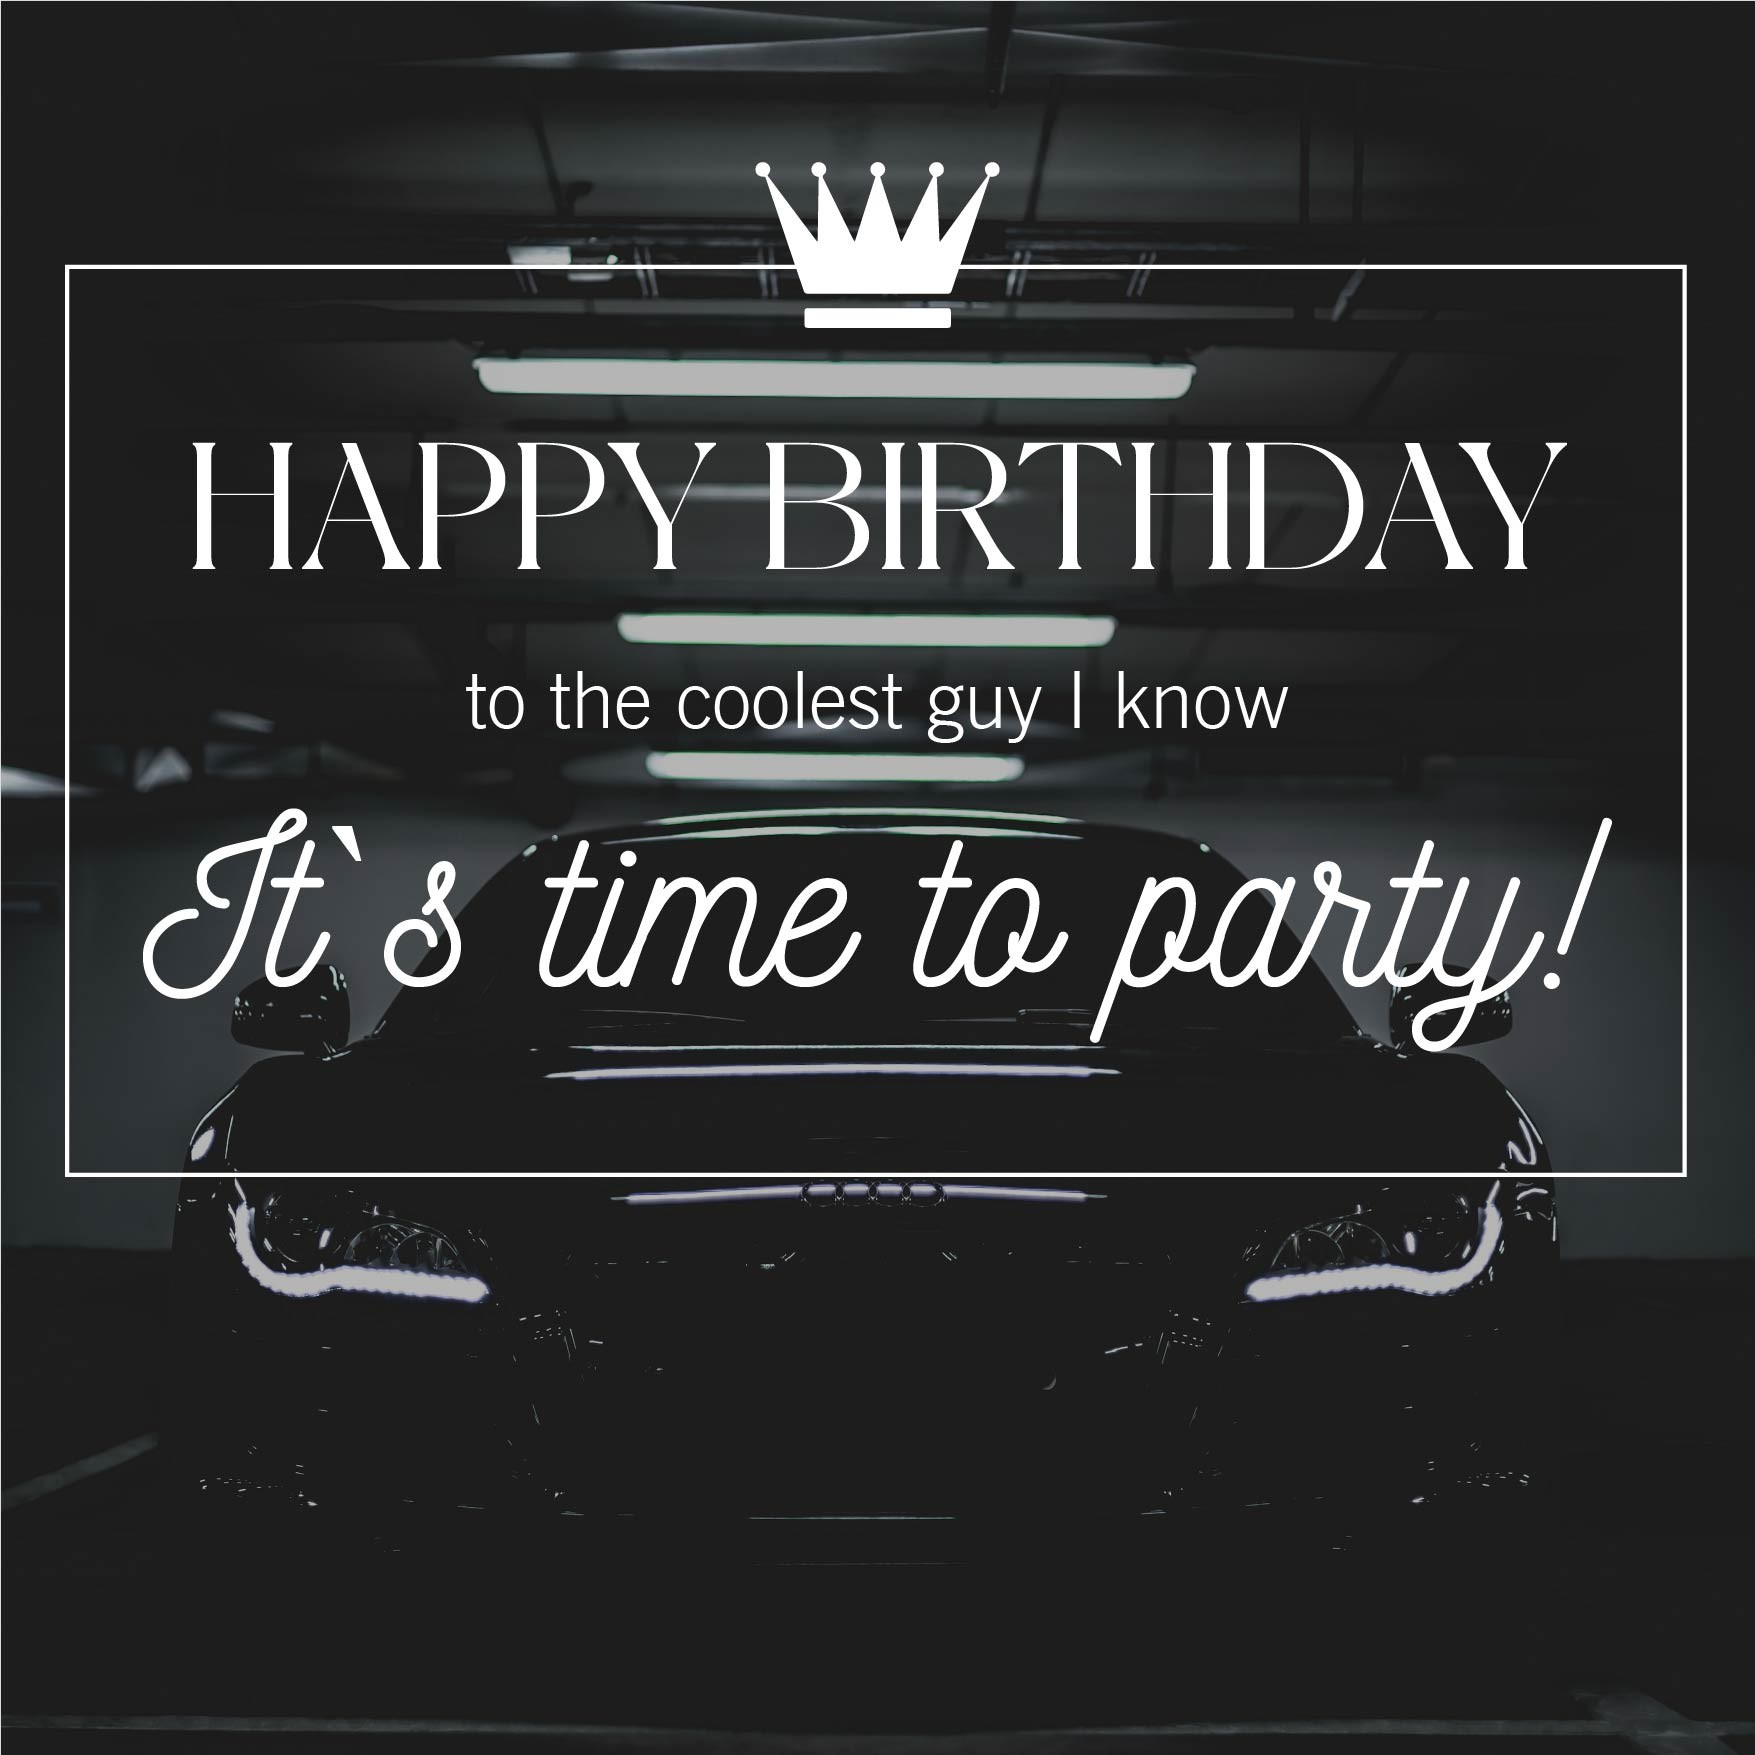 Free Happy Birthday Wishes  for Guy with Car - birthdayimg.com